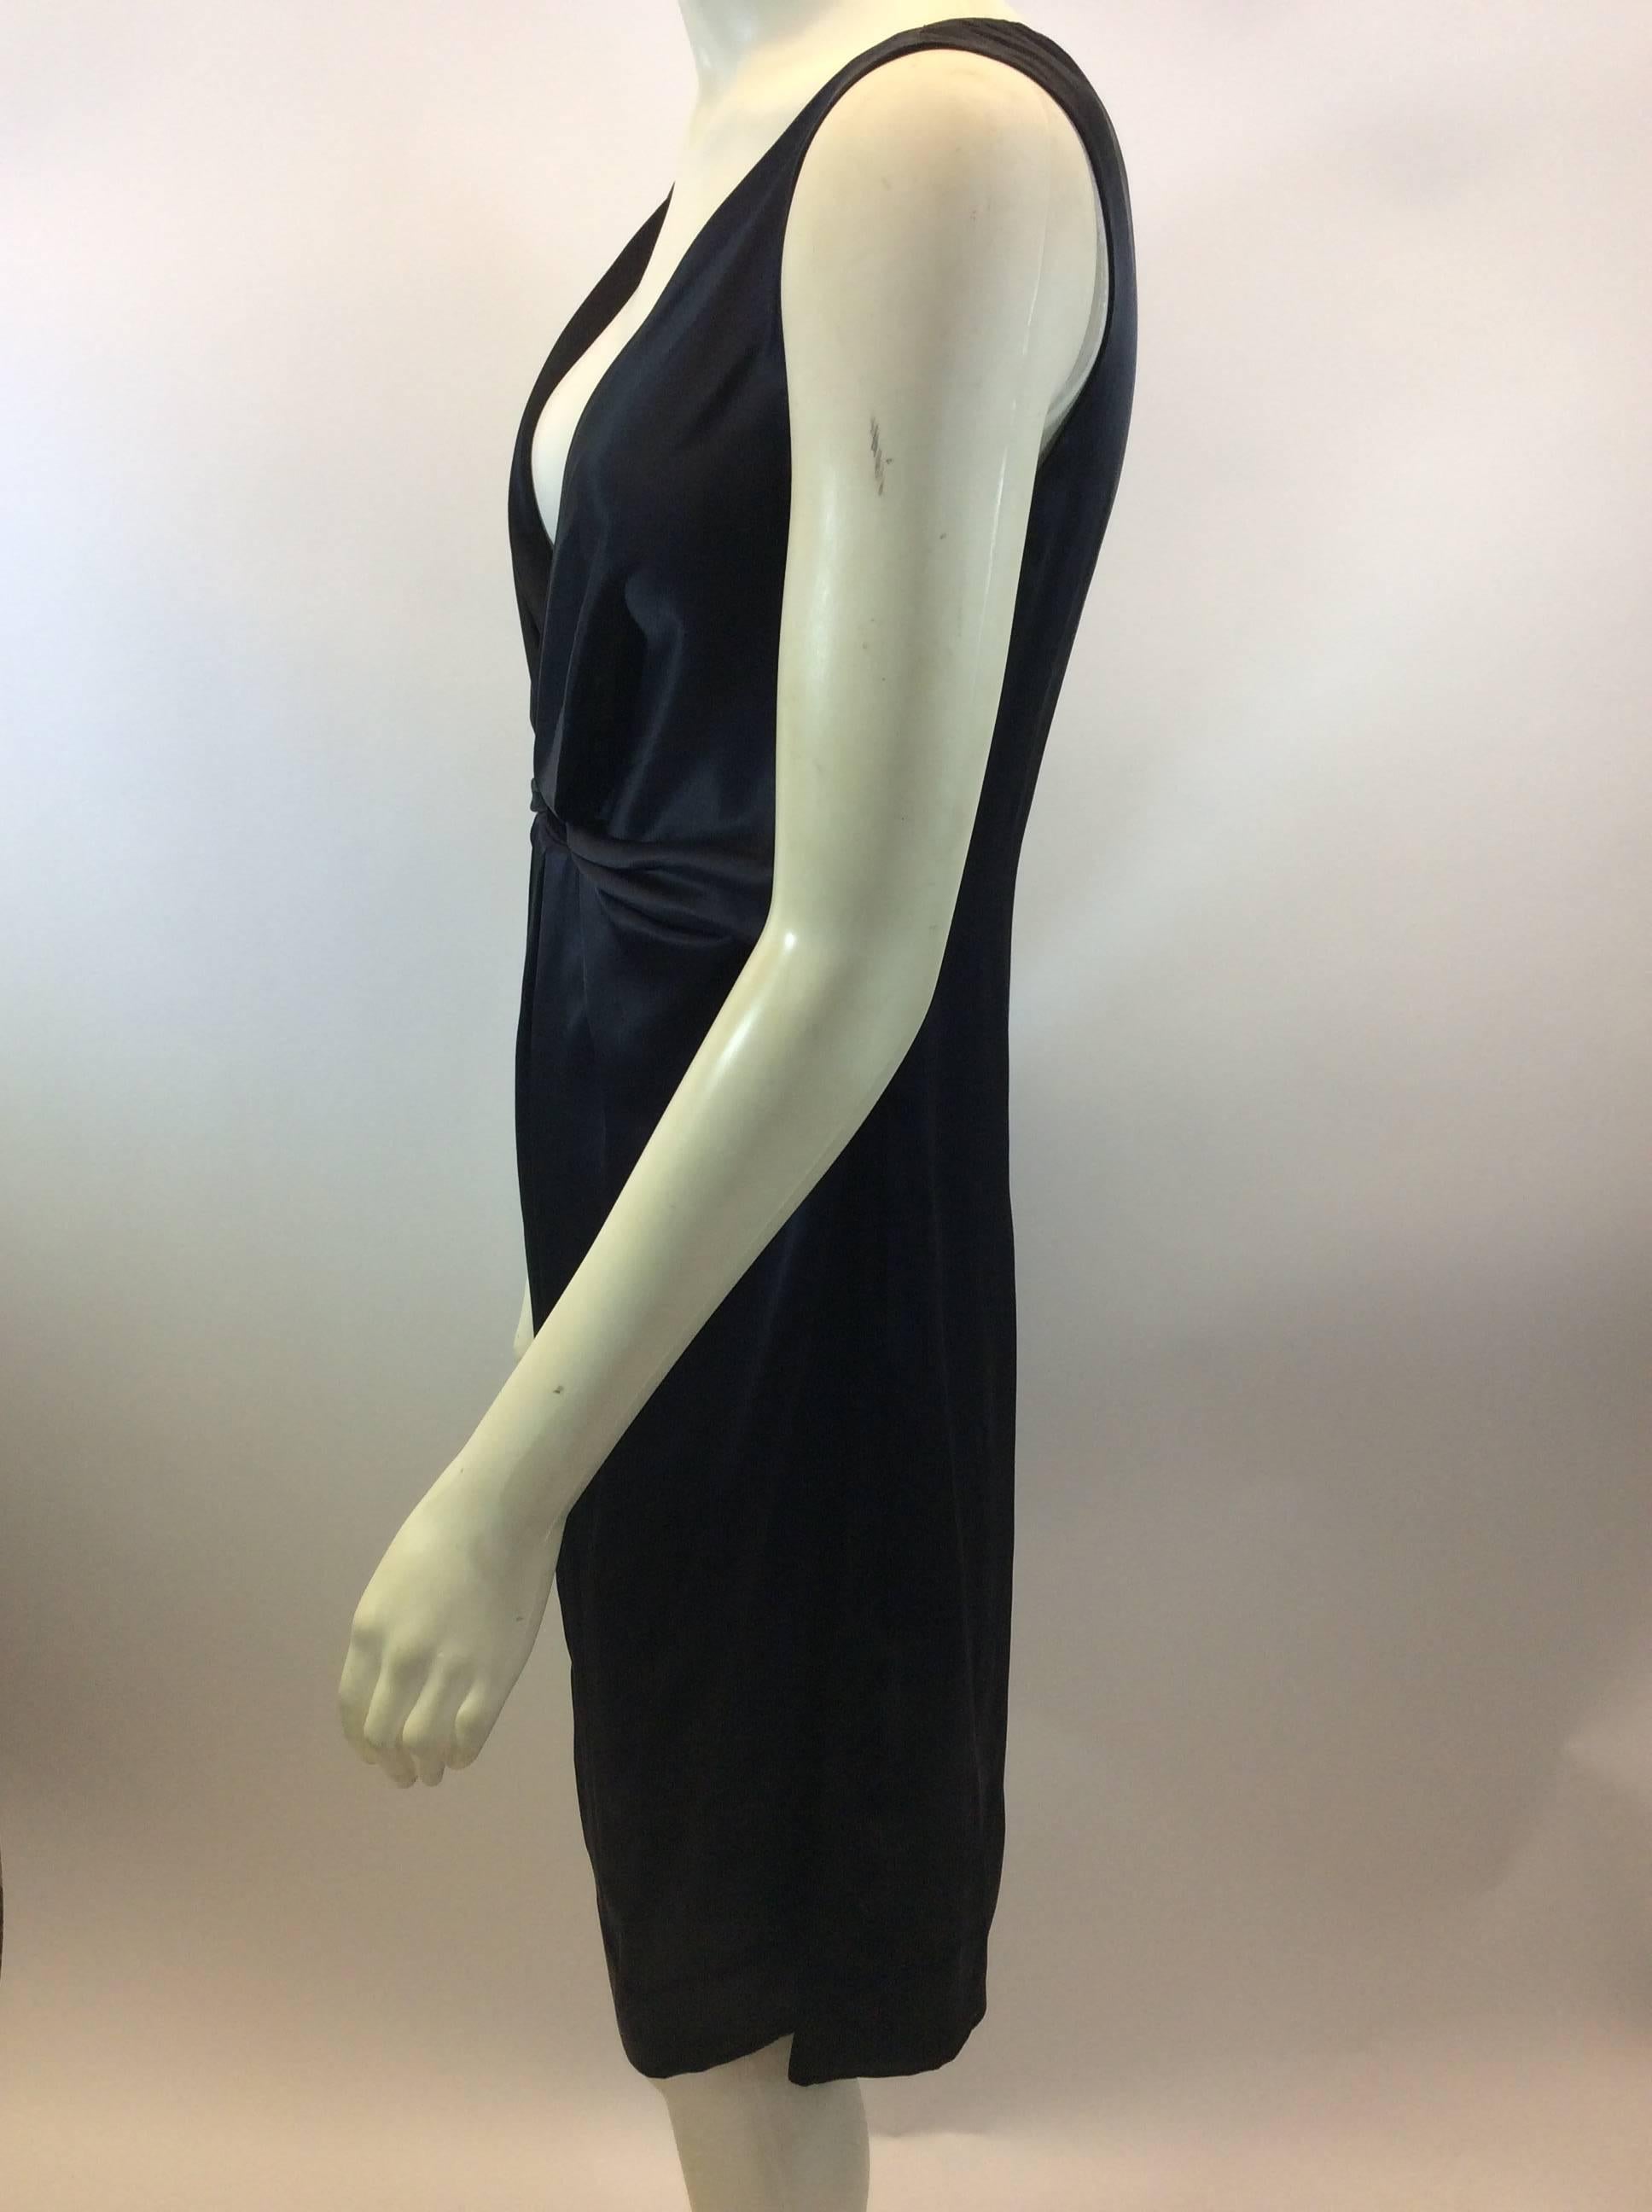 Prada Black Silk Dress
$299
Made in Italy
100% Silk
Size 40
Length 36